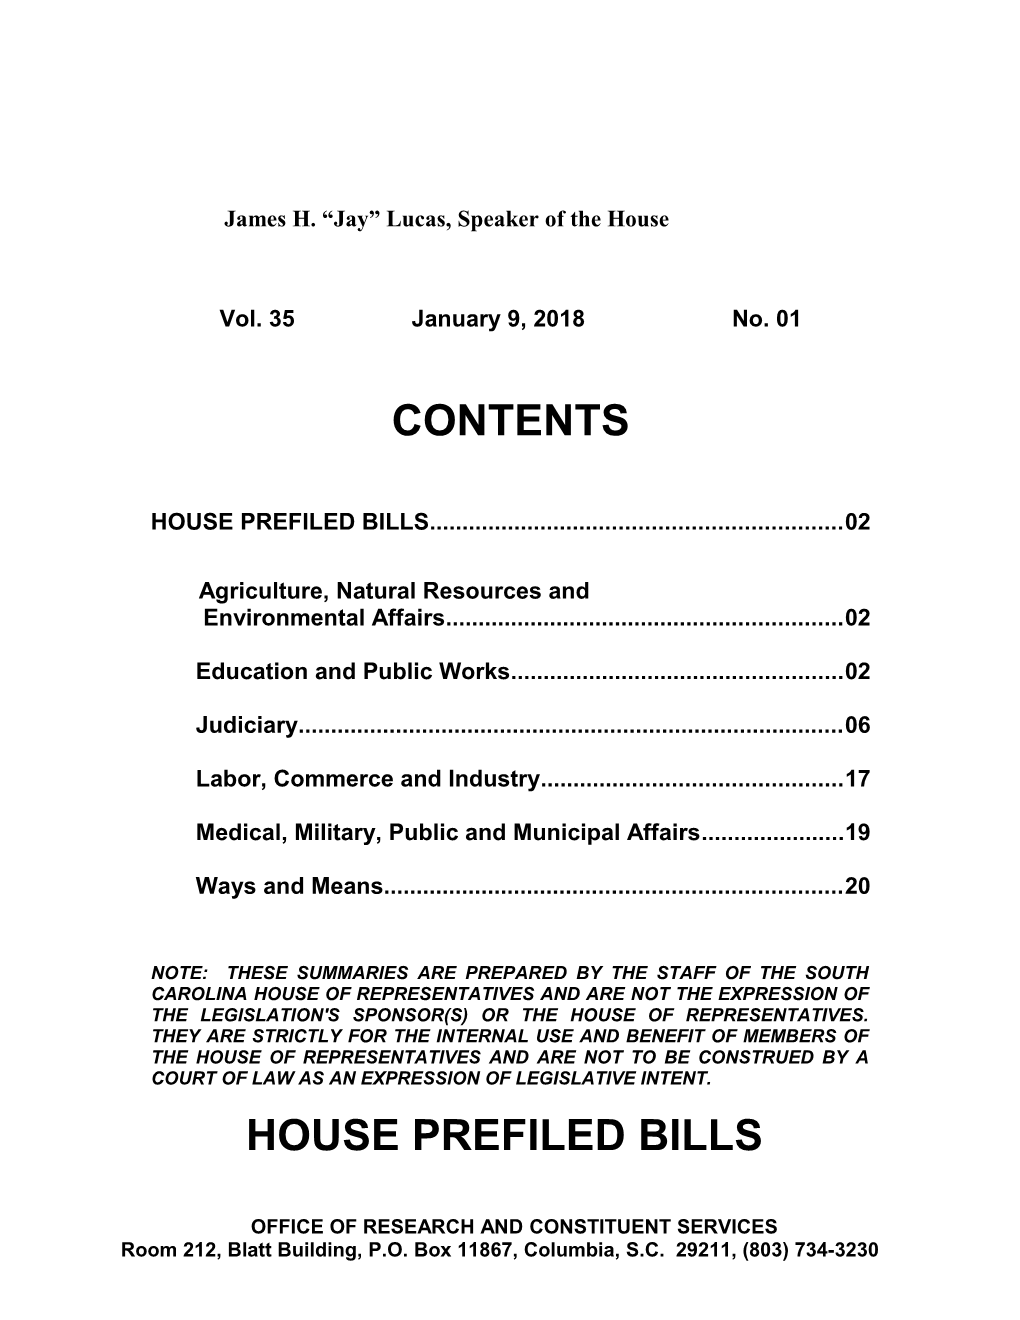 House Prefiled Bills 02